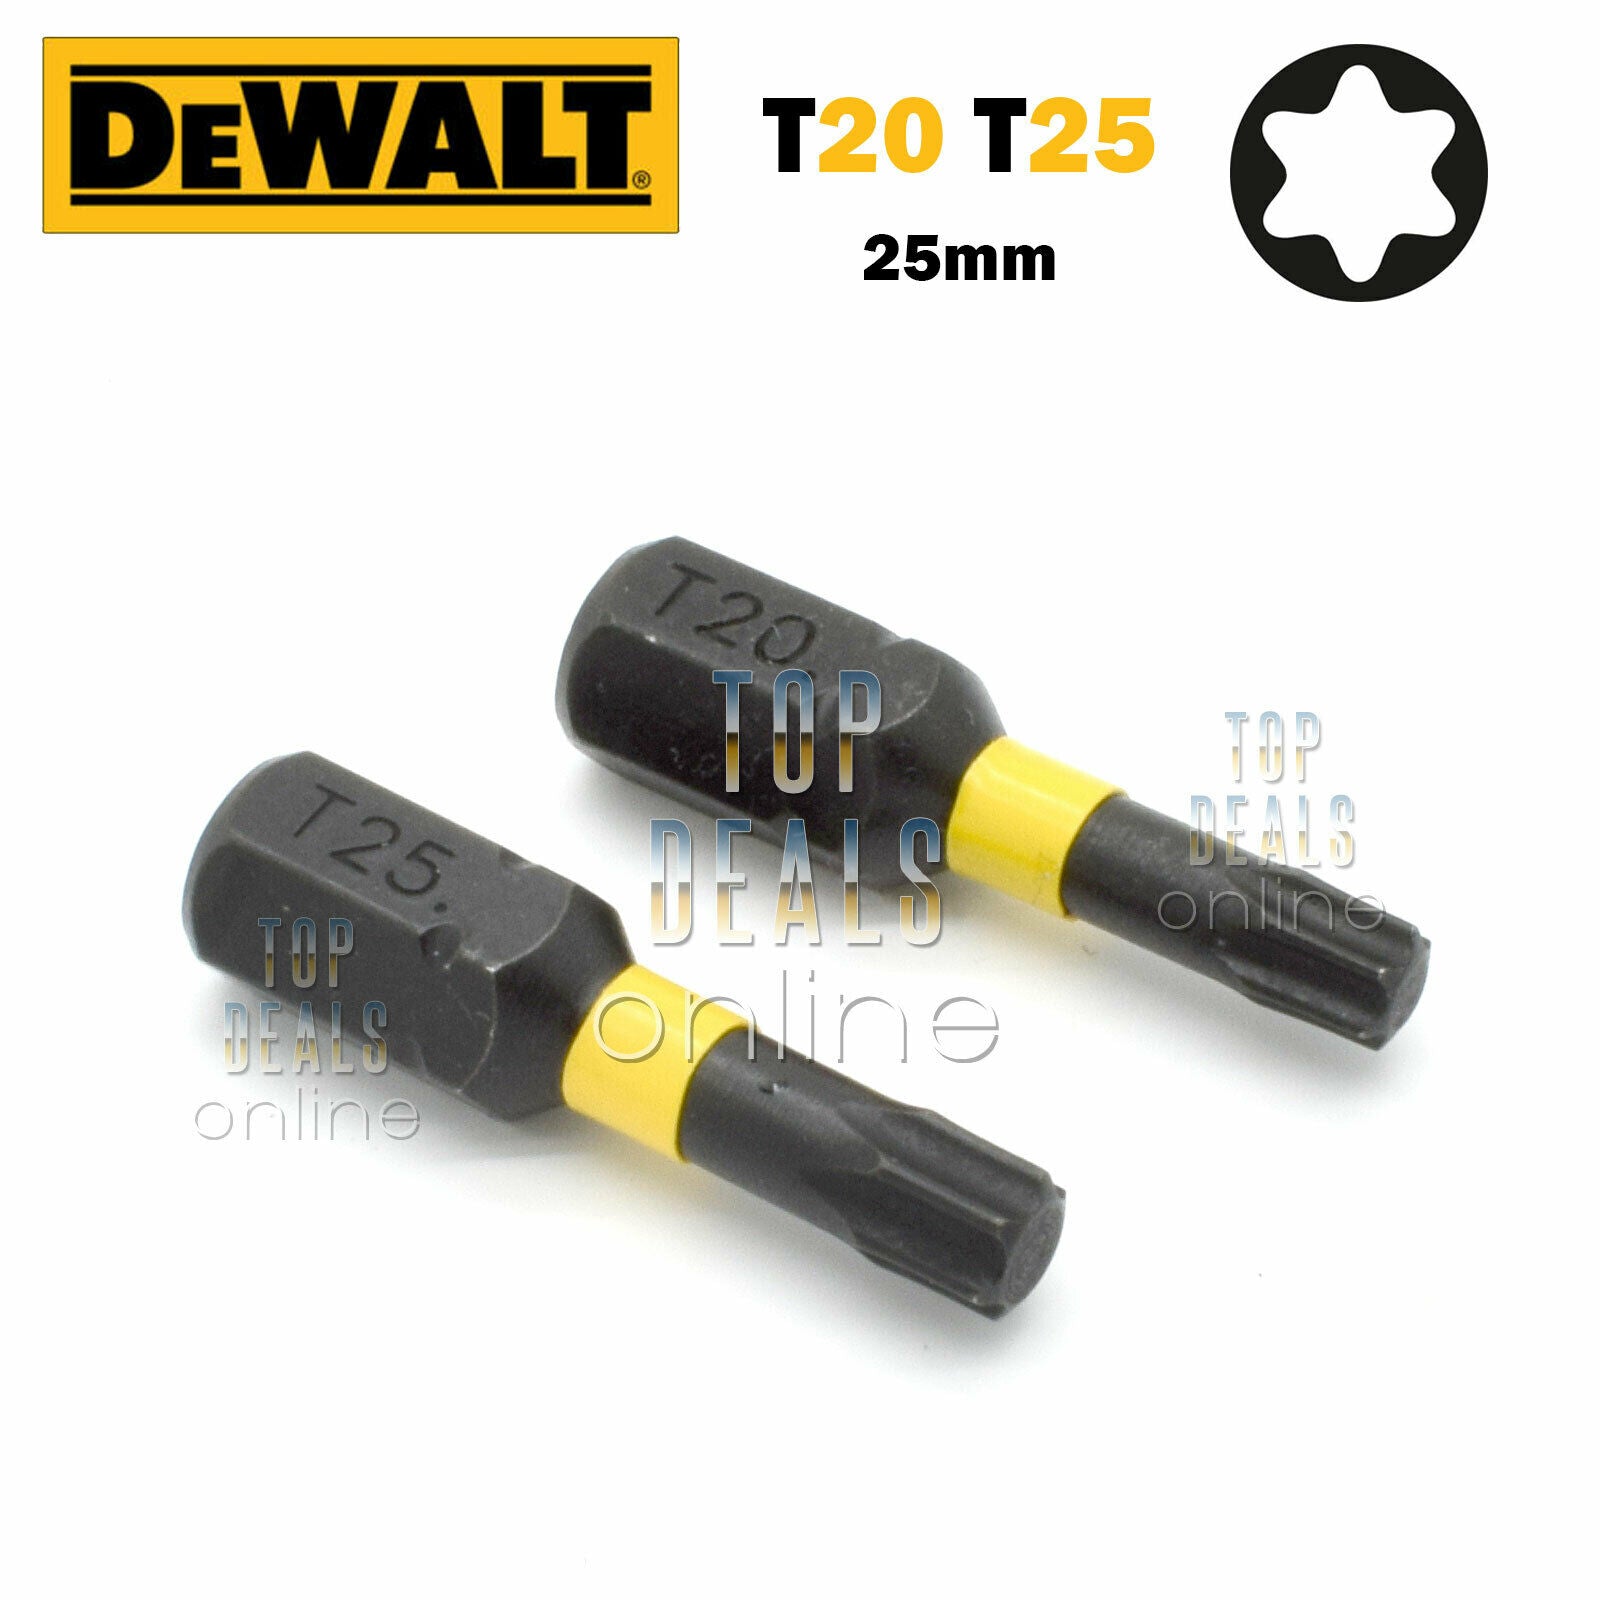 DeWALT Impact T20 T25 25mm Torx Torsion Screwdriver Bits